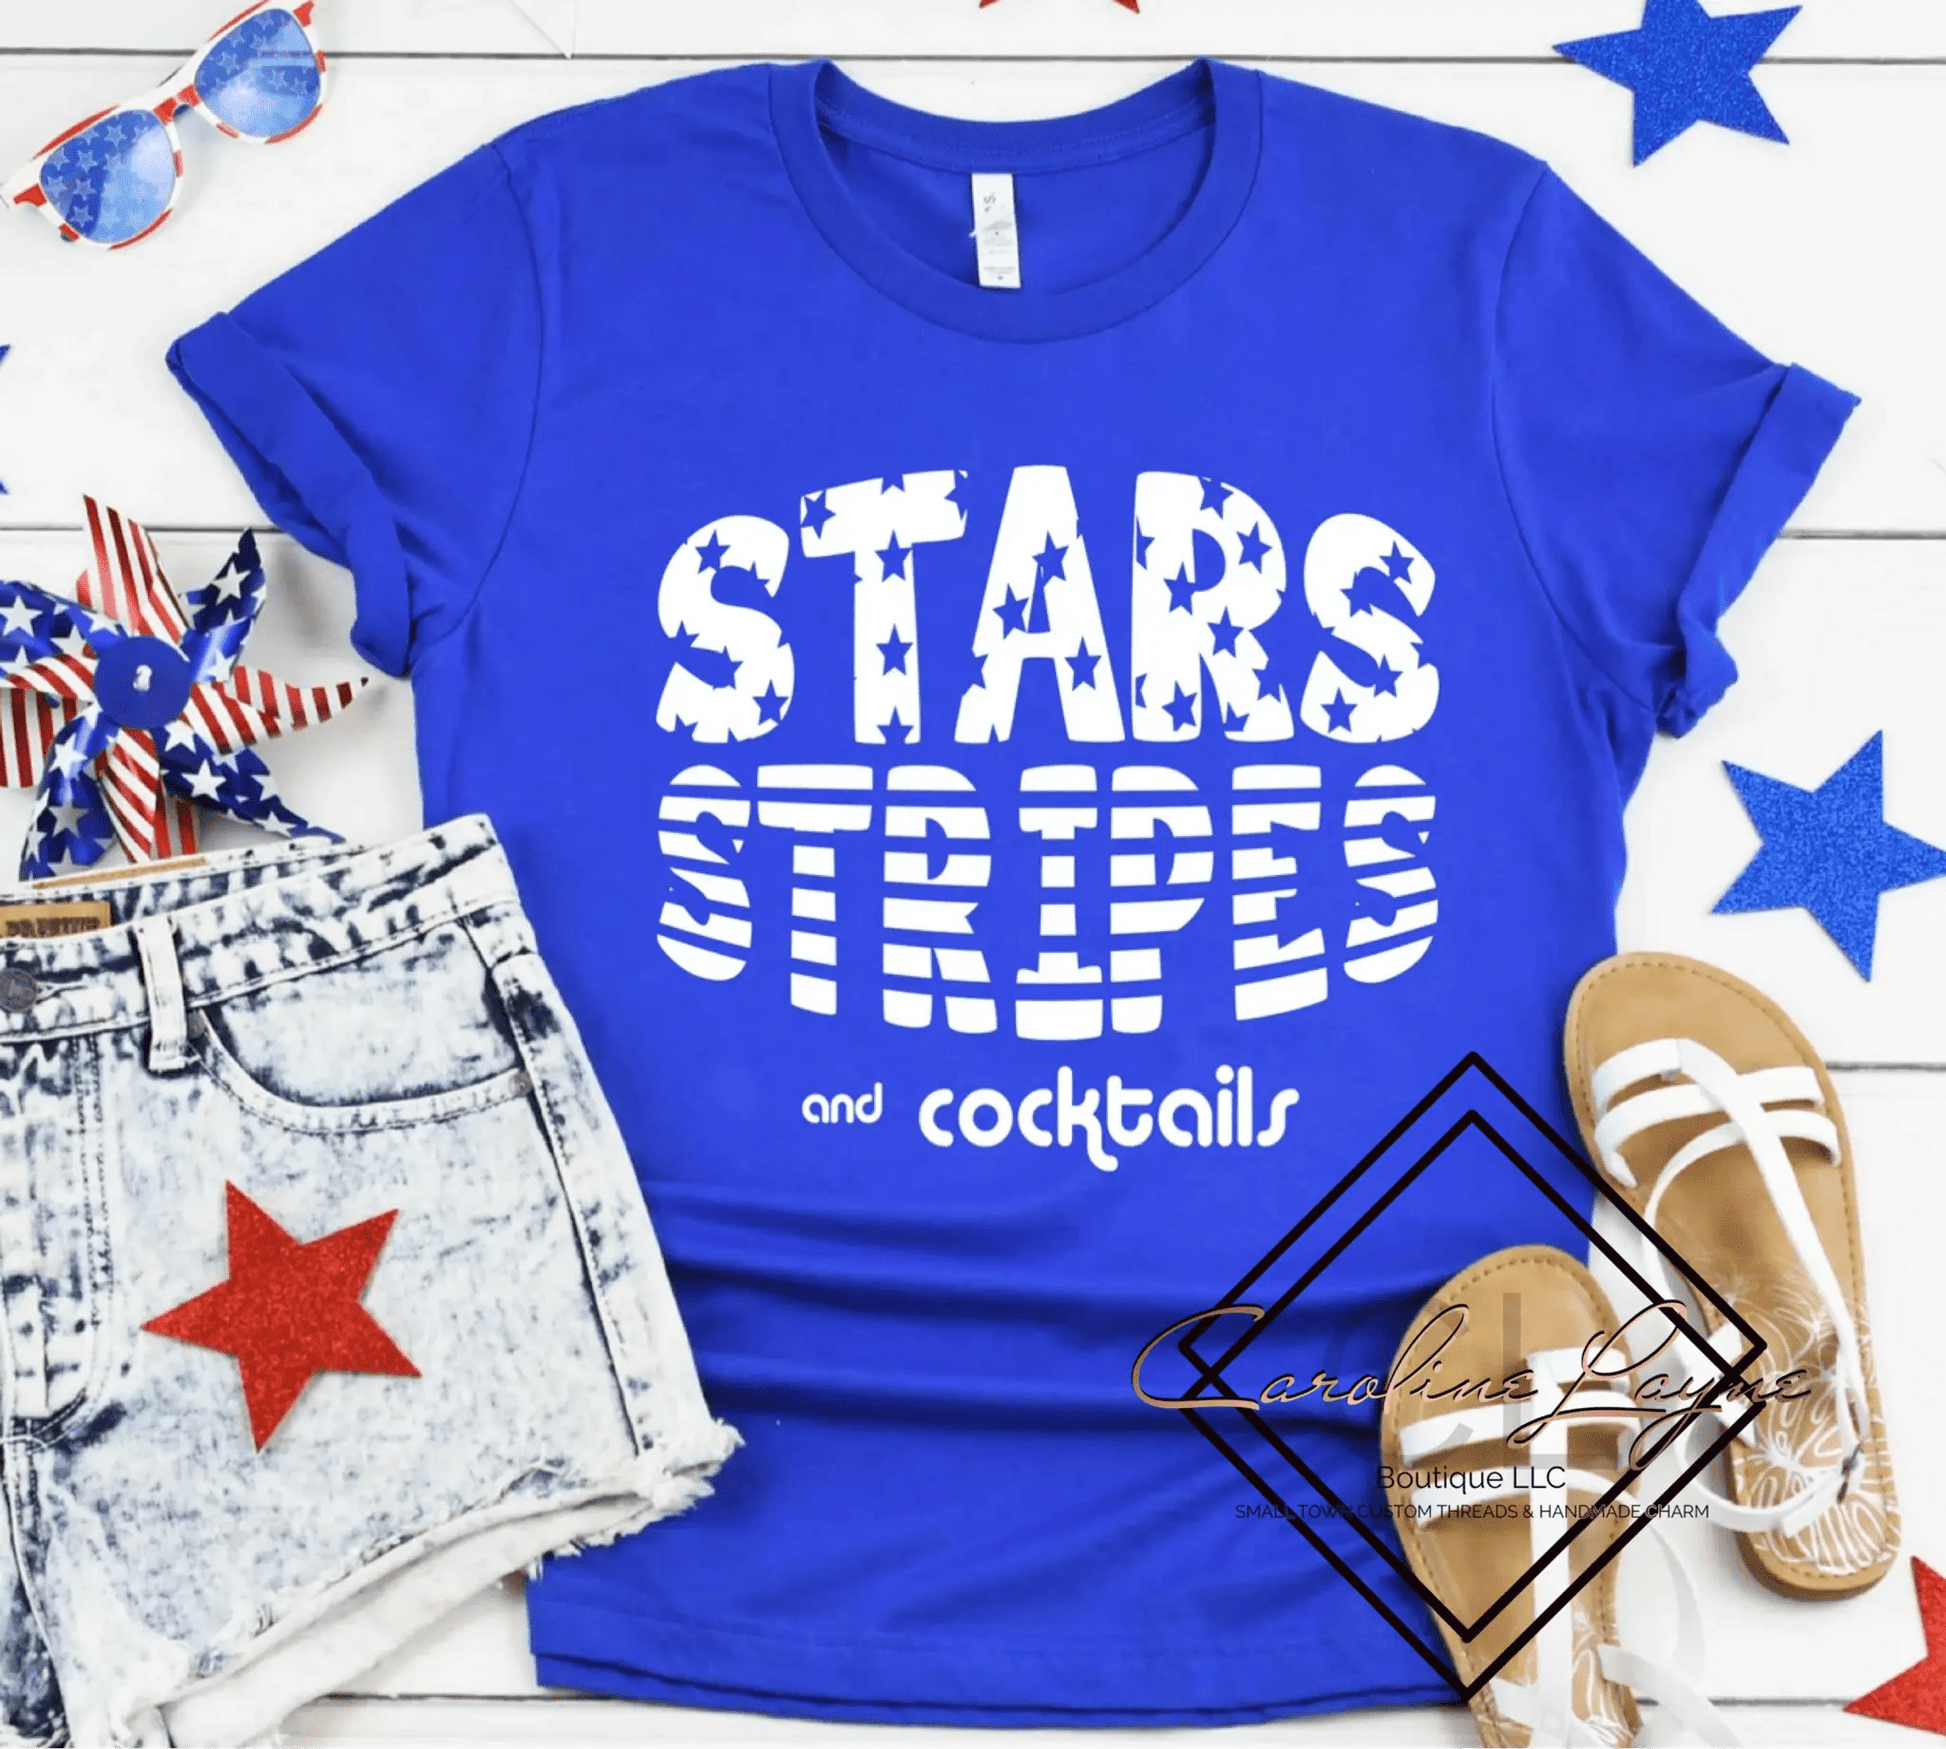 Stars Stripes and Cocktails Tee - Caroline Layne Boutique LLC